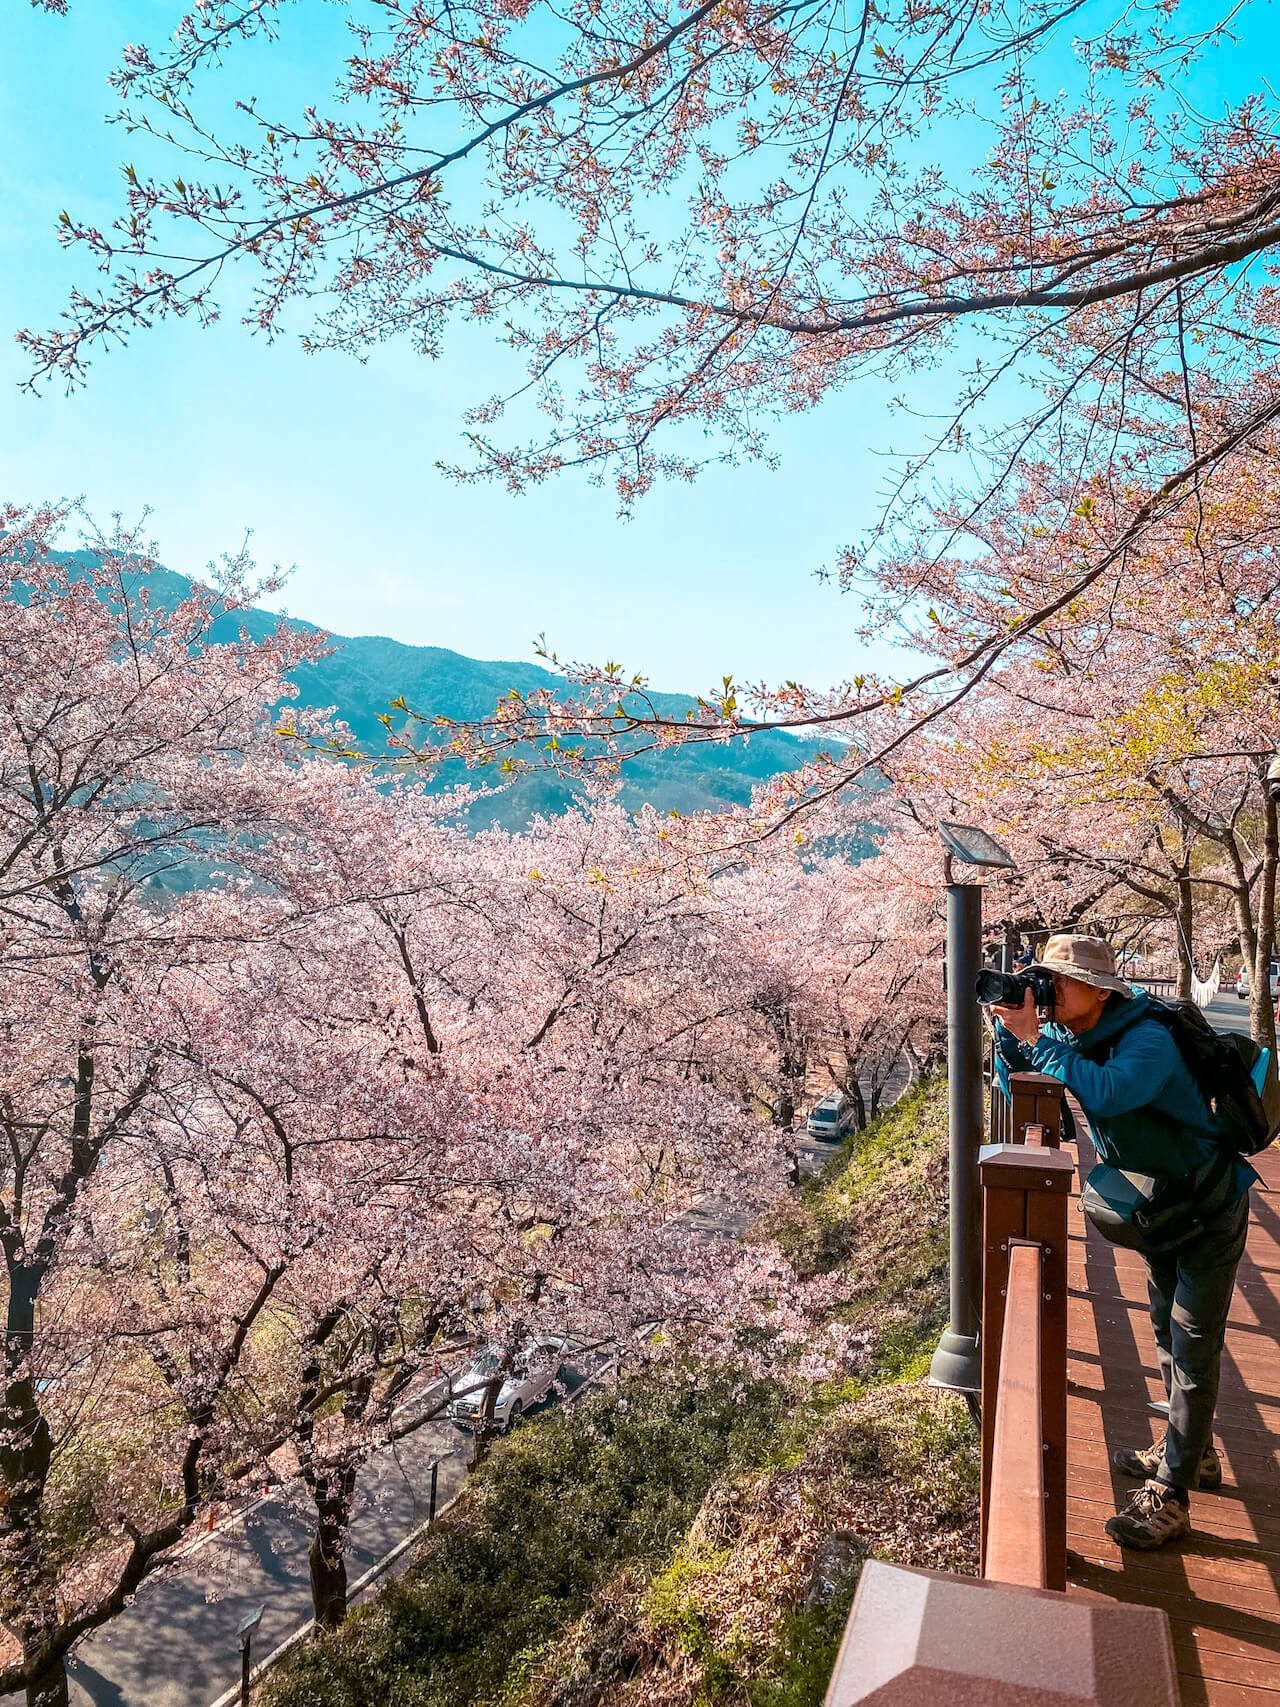 10-ri cherry blossom trail in hadong, south korea